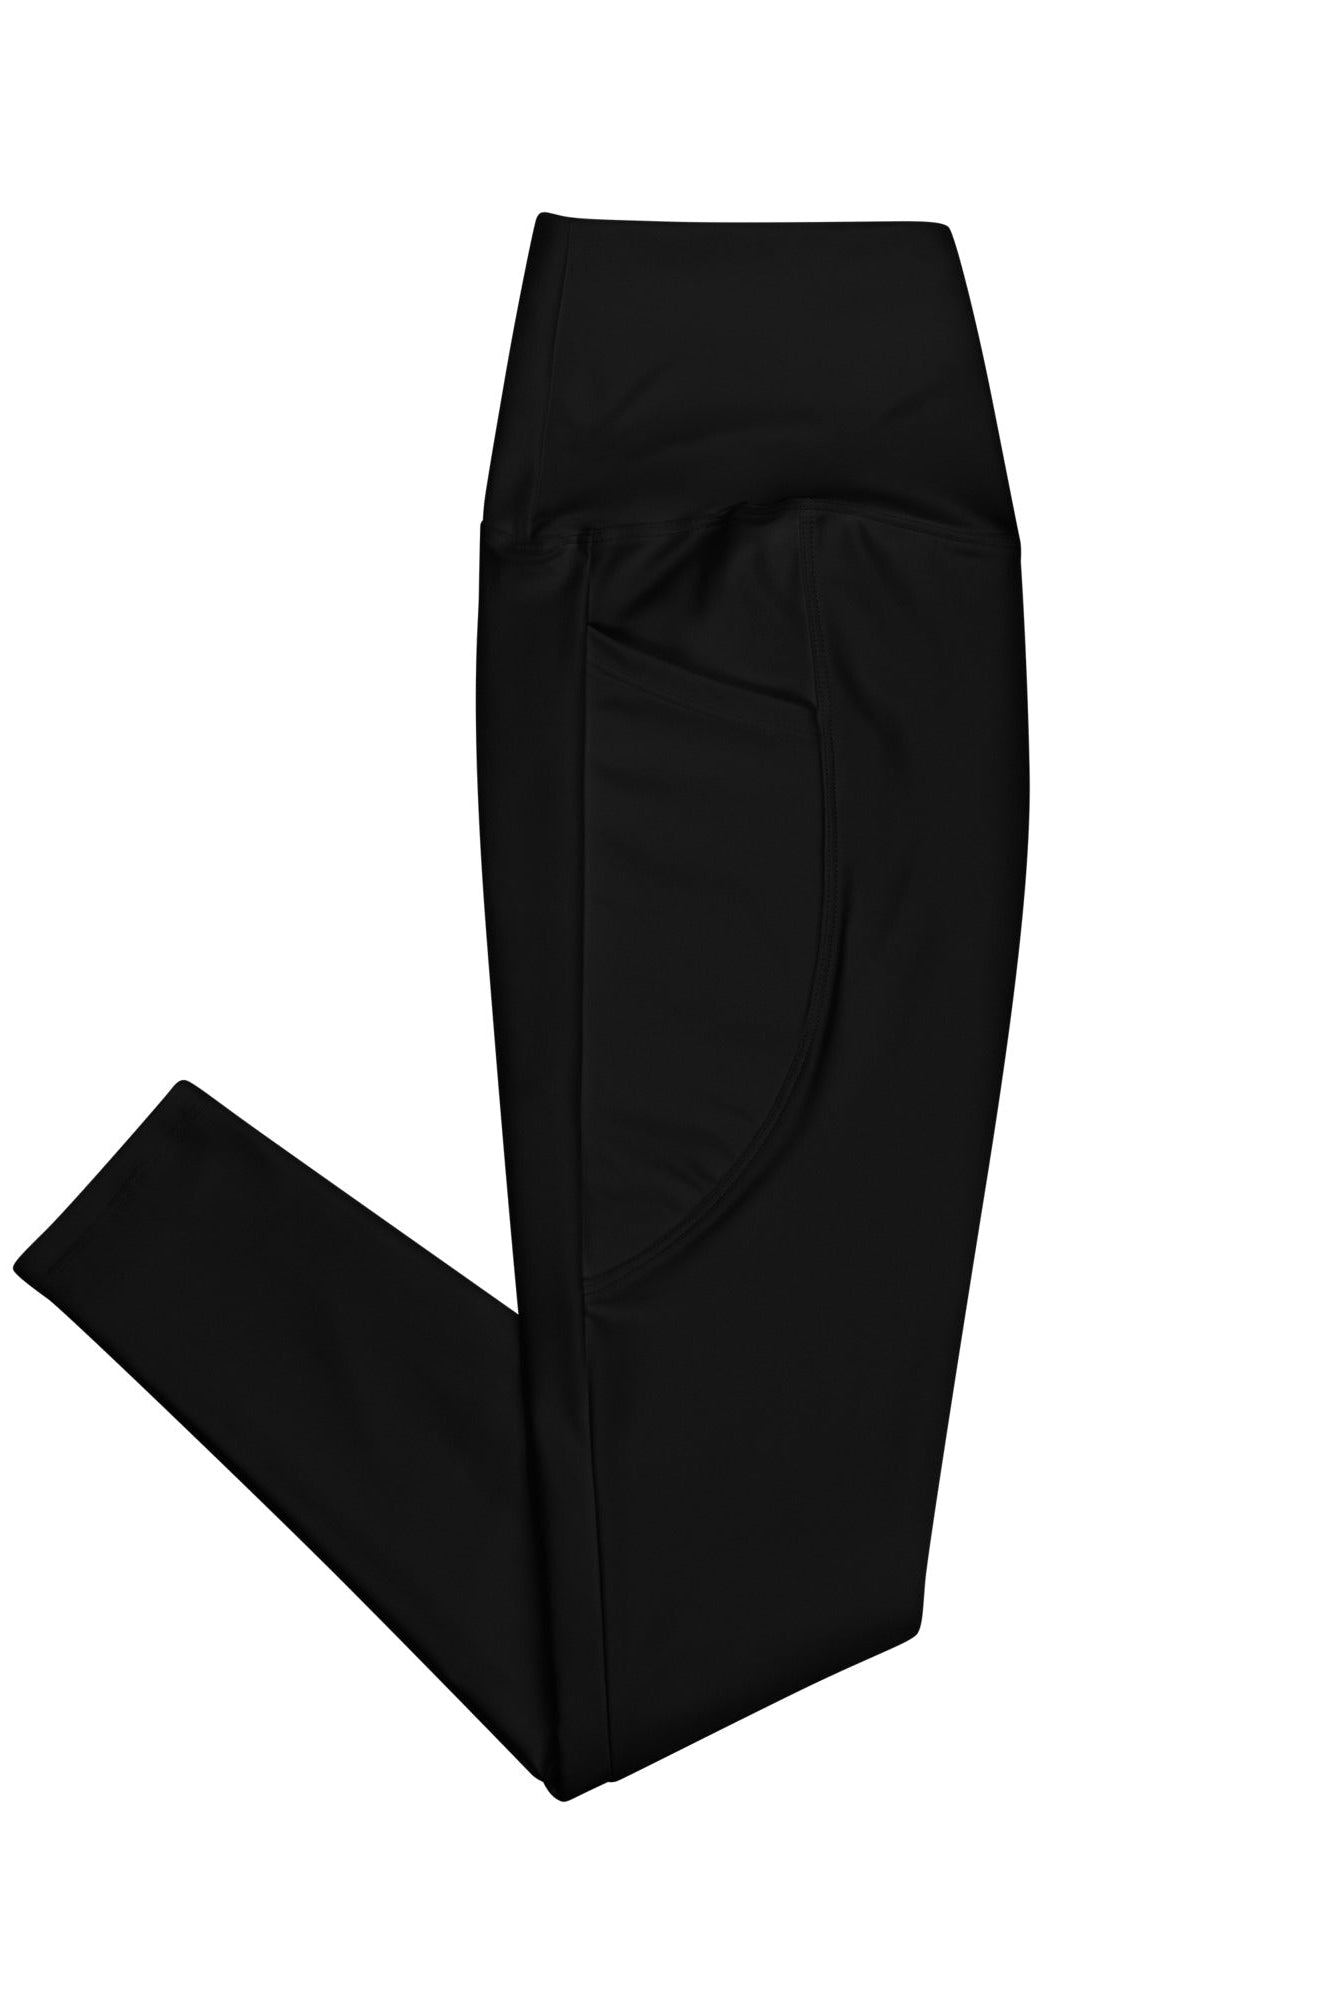 Bellybunny-Women's Classic Leggings-Black with White Logo